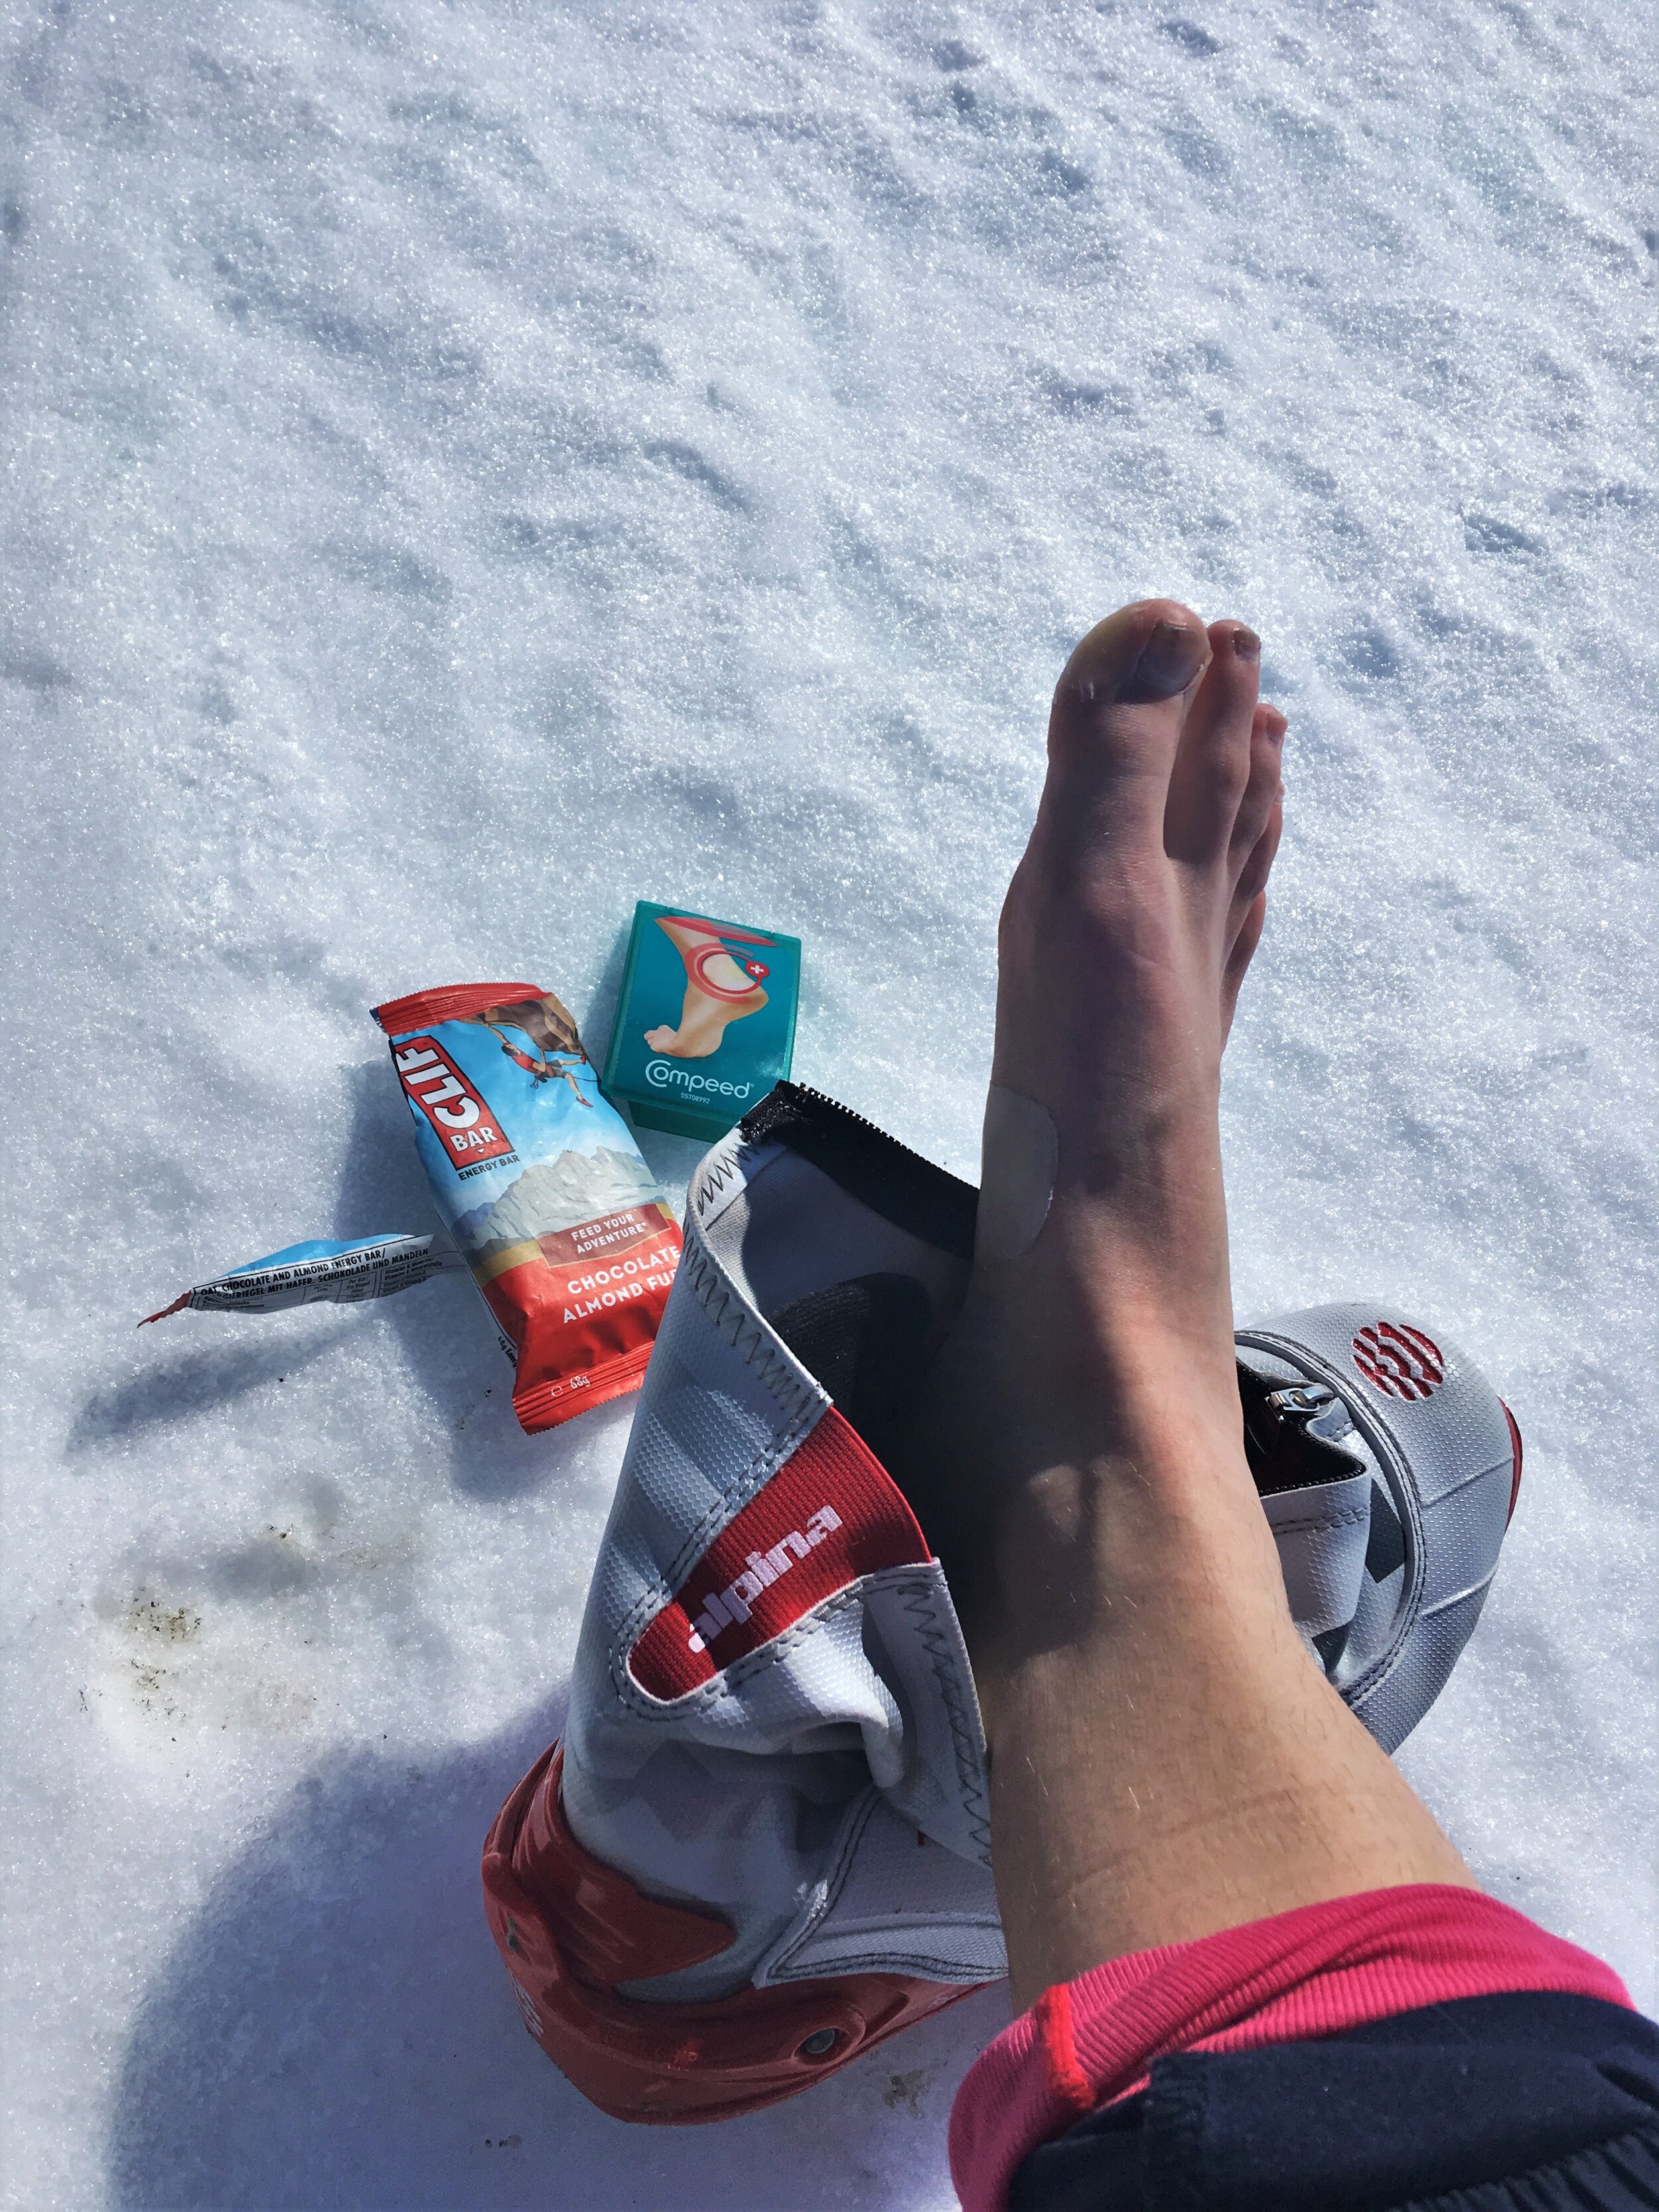 HikeGoo Blister Prevention Cream Specifically Formulated for Feet 